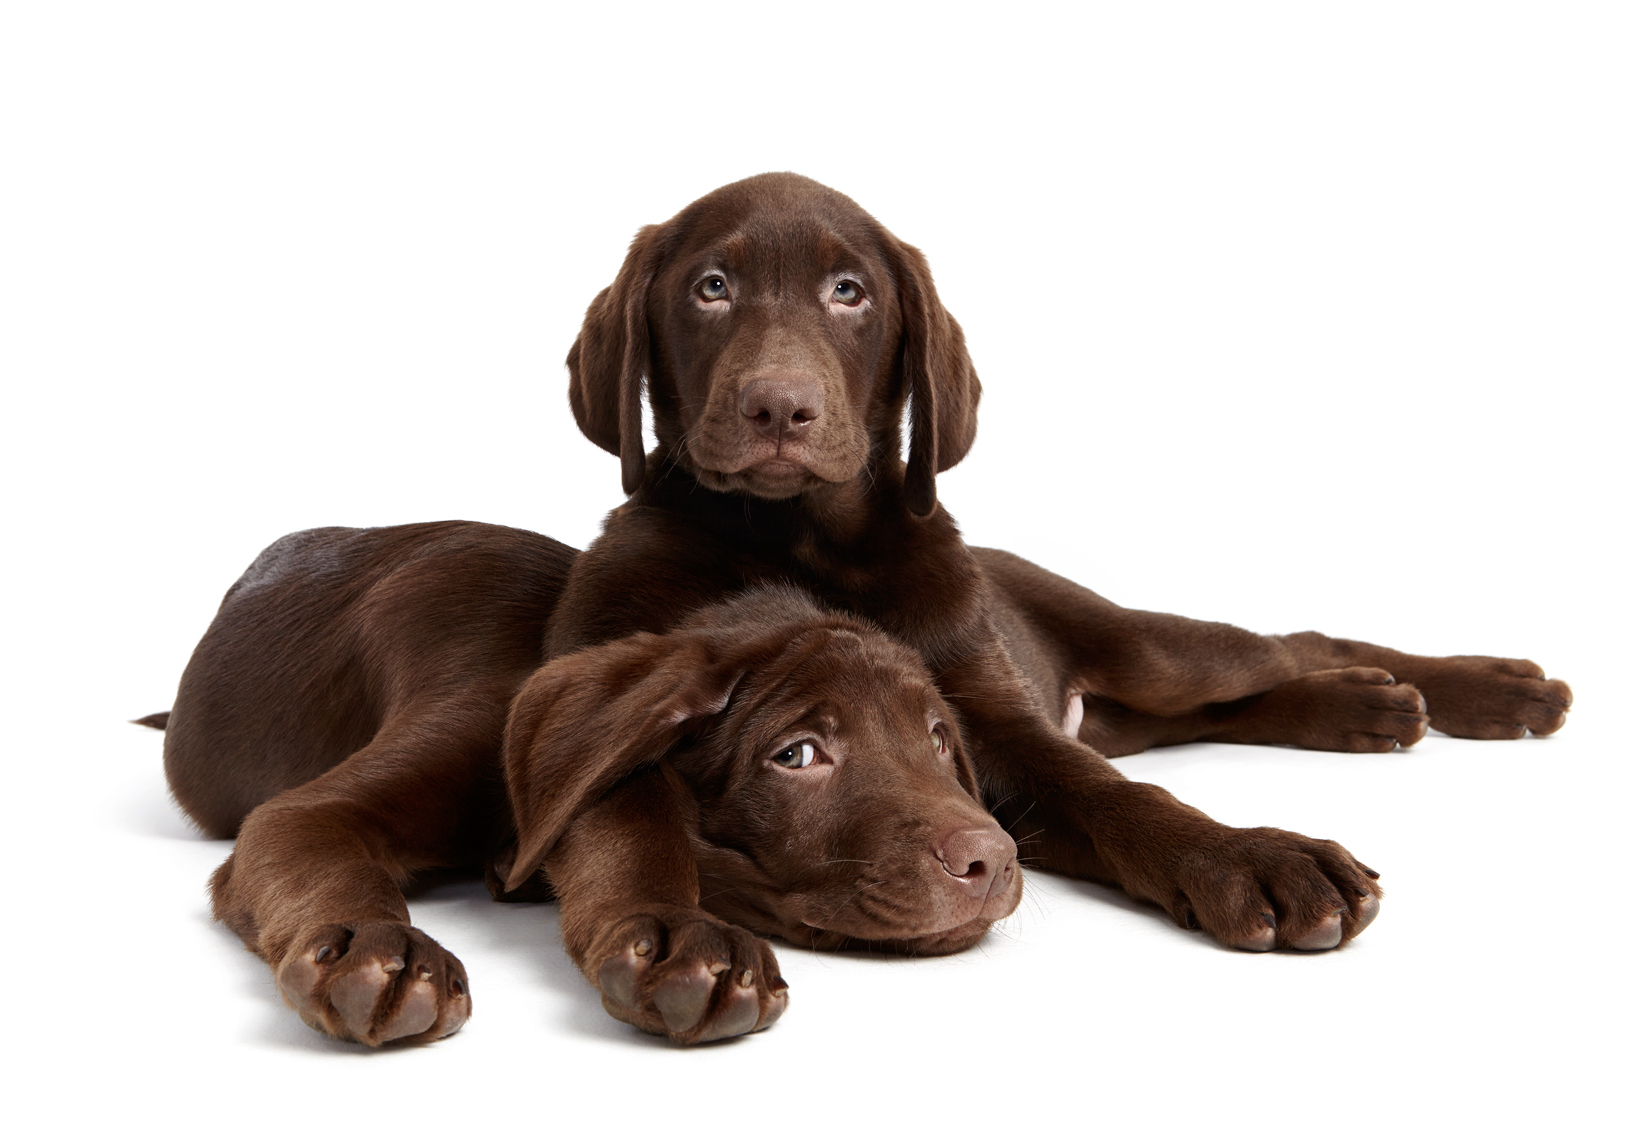 Chocolate labrador puppies cuddling